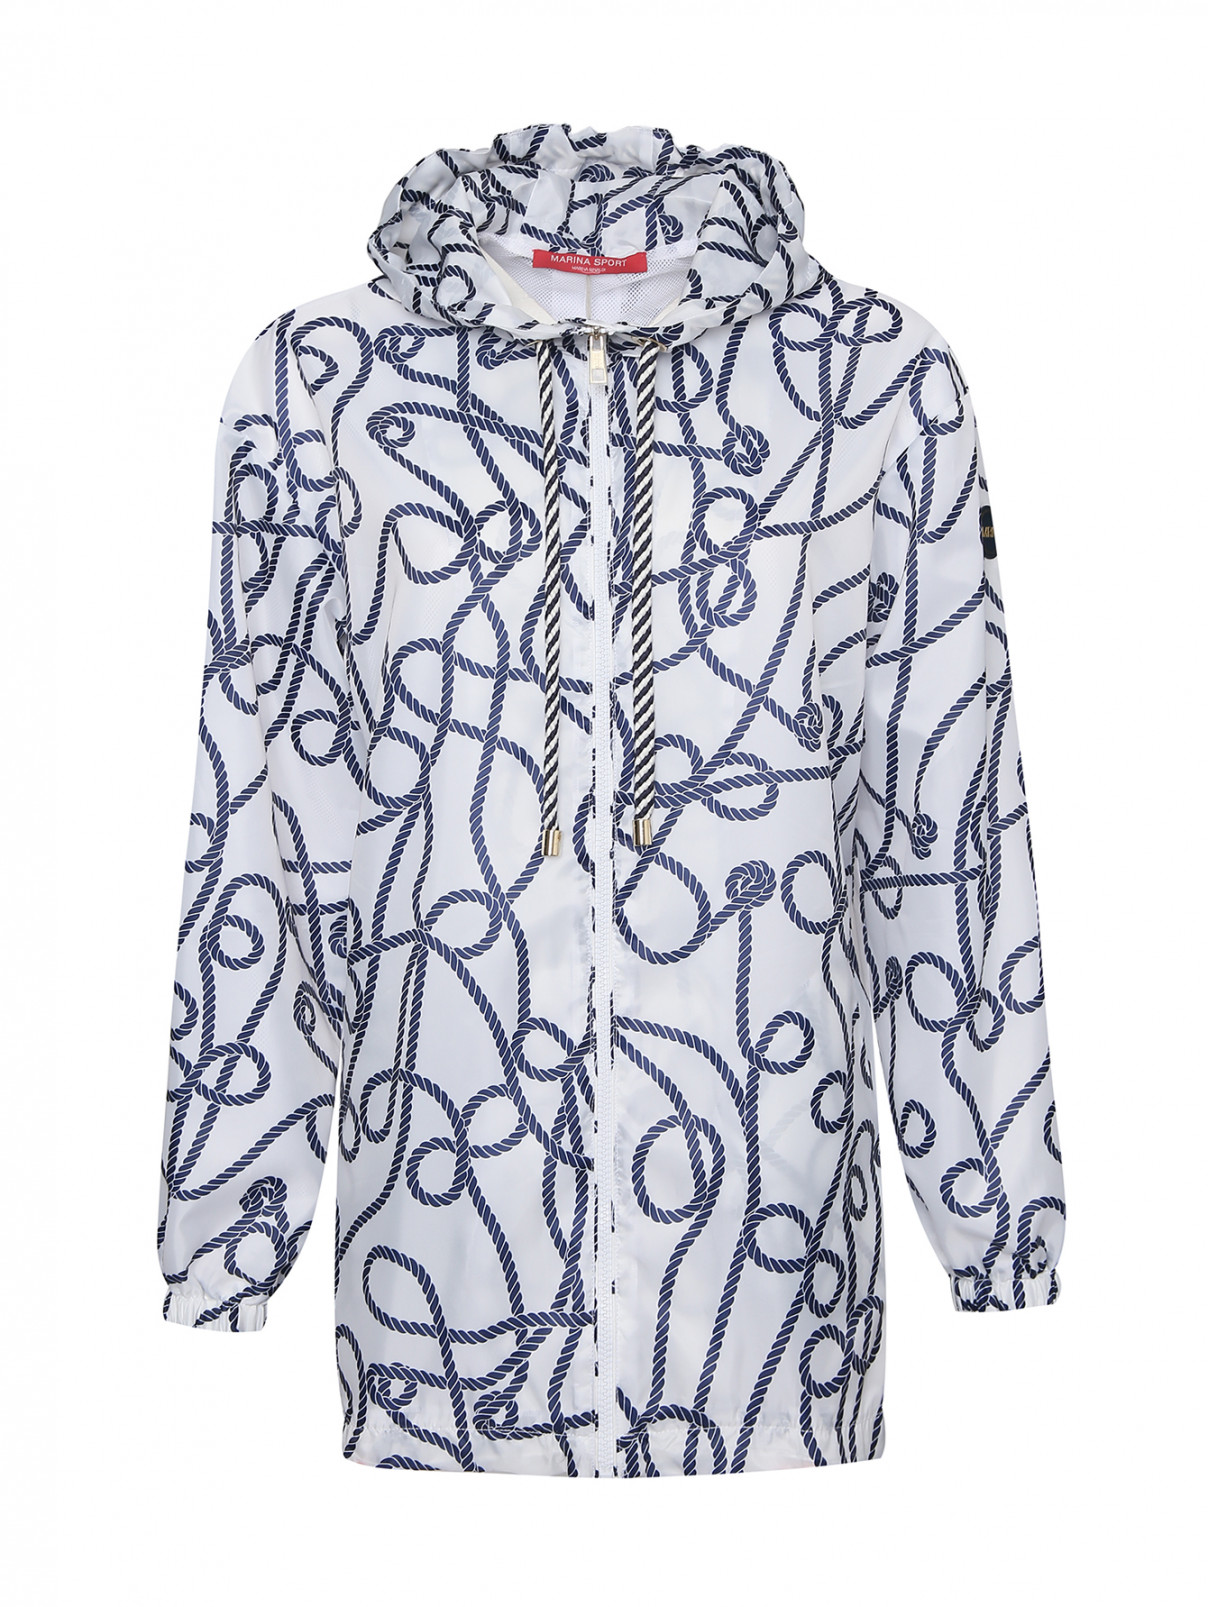 Куртка на молнии с узором Marina Rinaldi  –  Общий вид  – Цвет:  Мультиколор